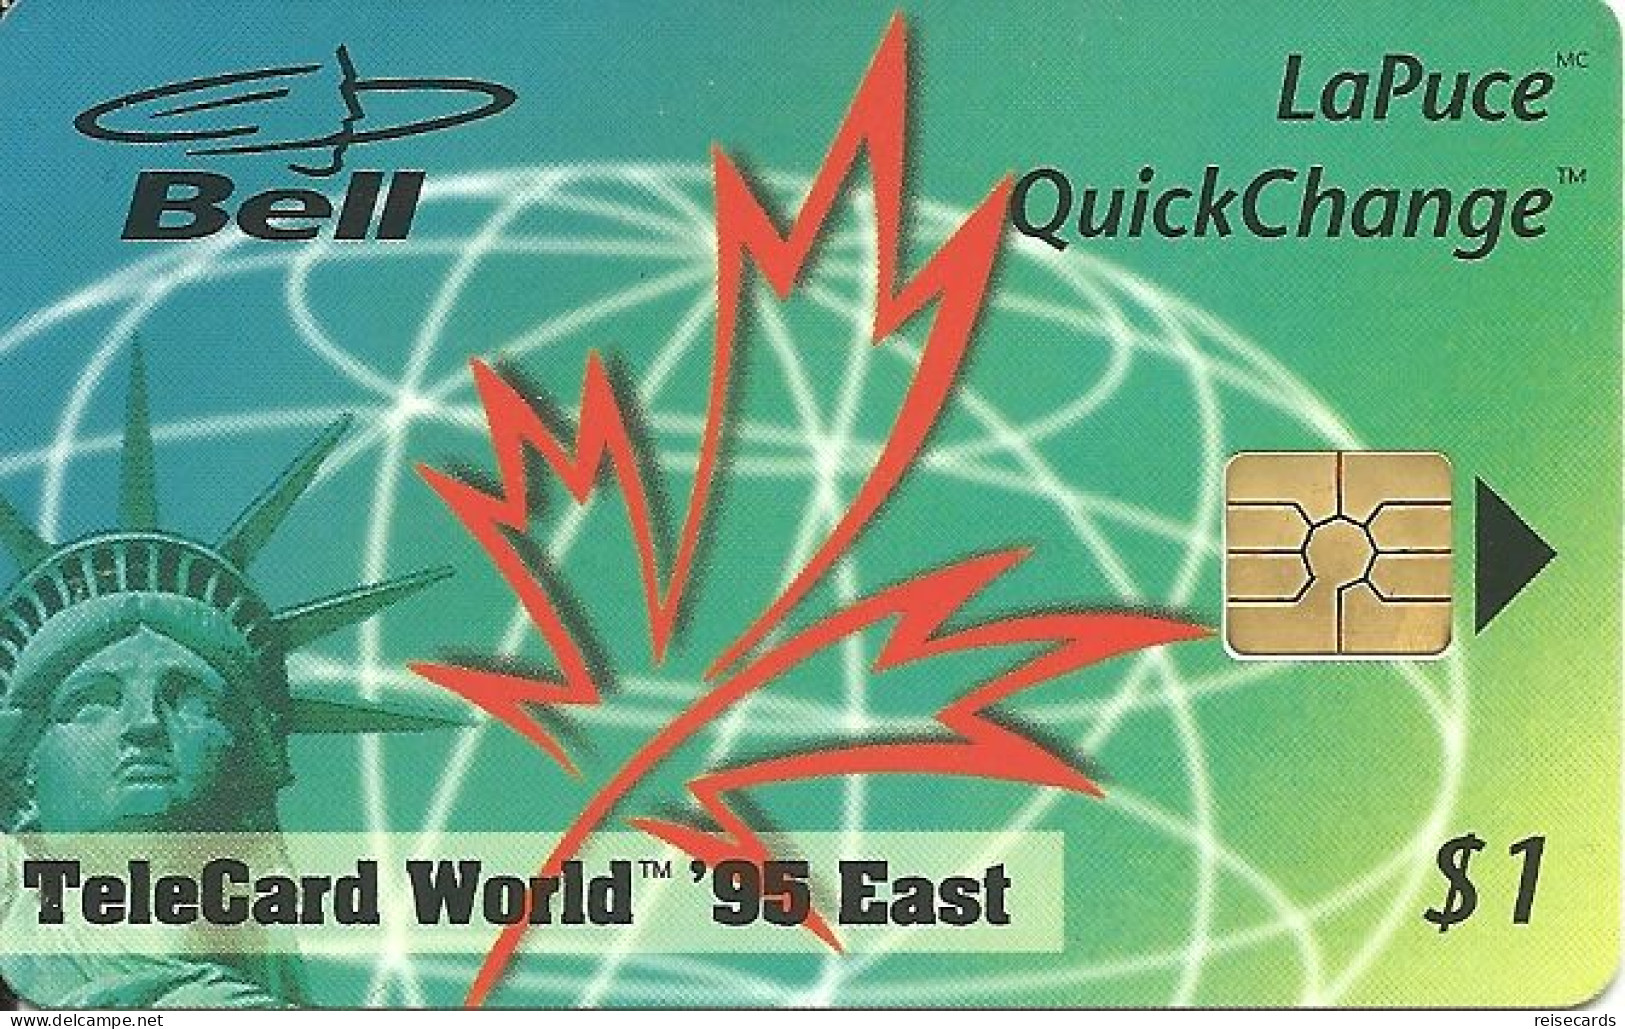 Canada: Bell - TeleCard World '95 East Exposition New York. Mint - Canada